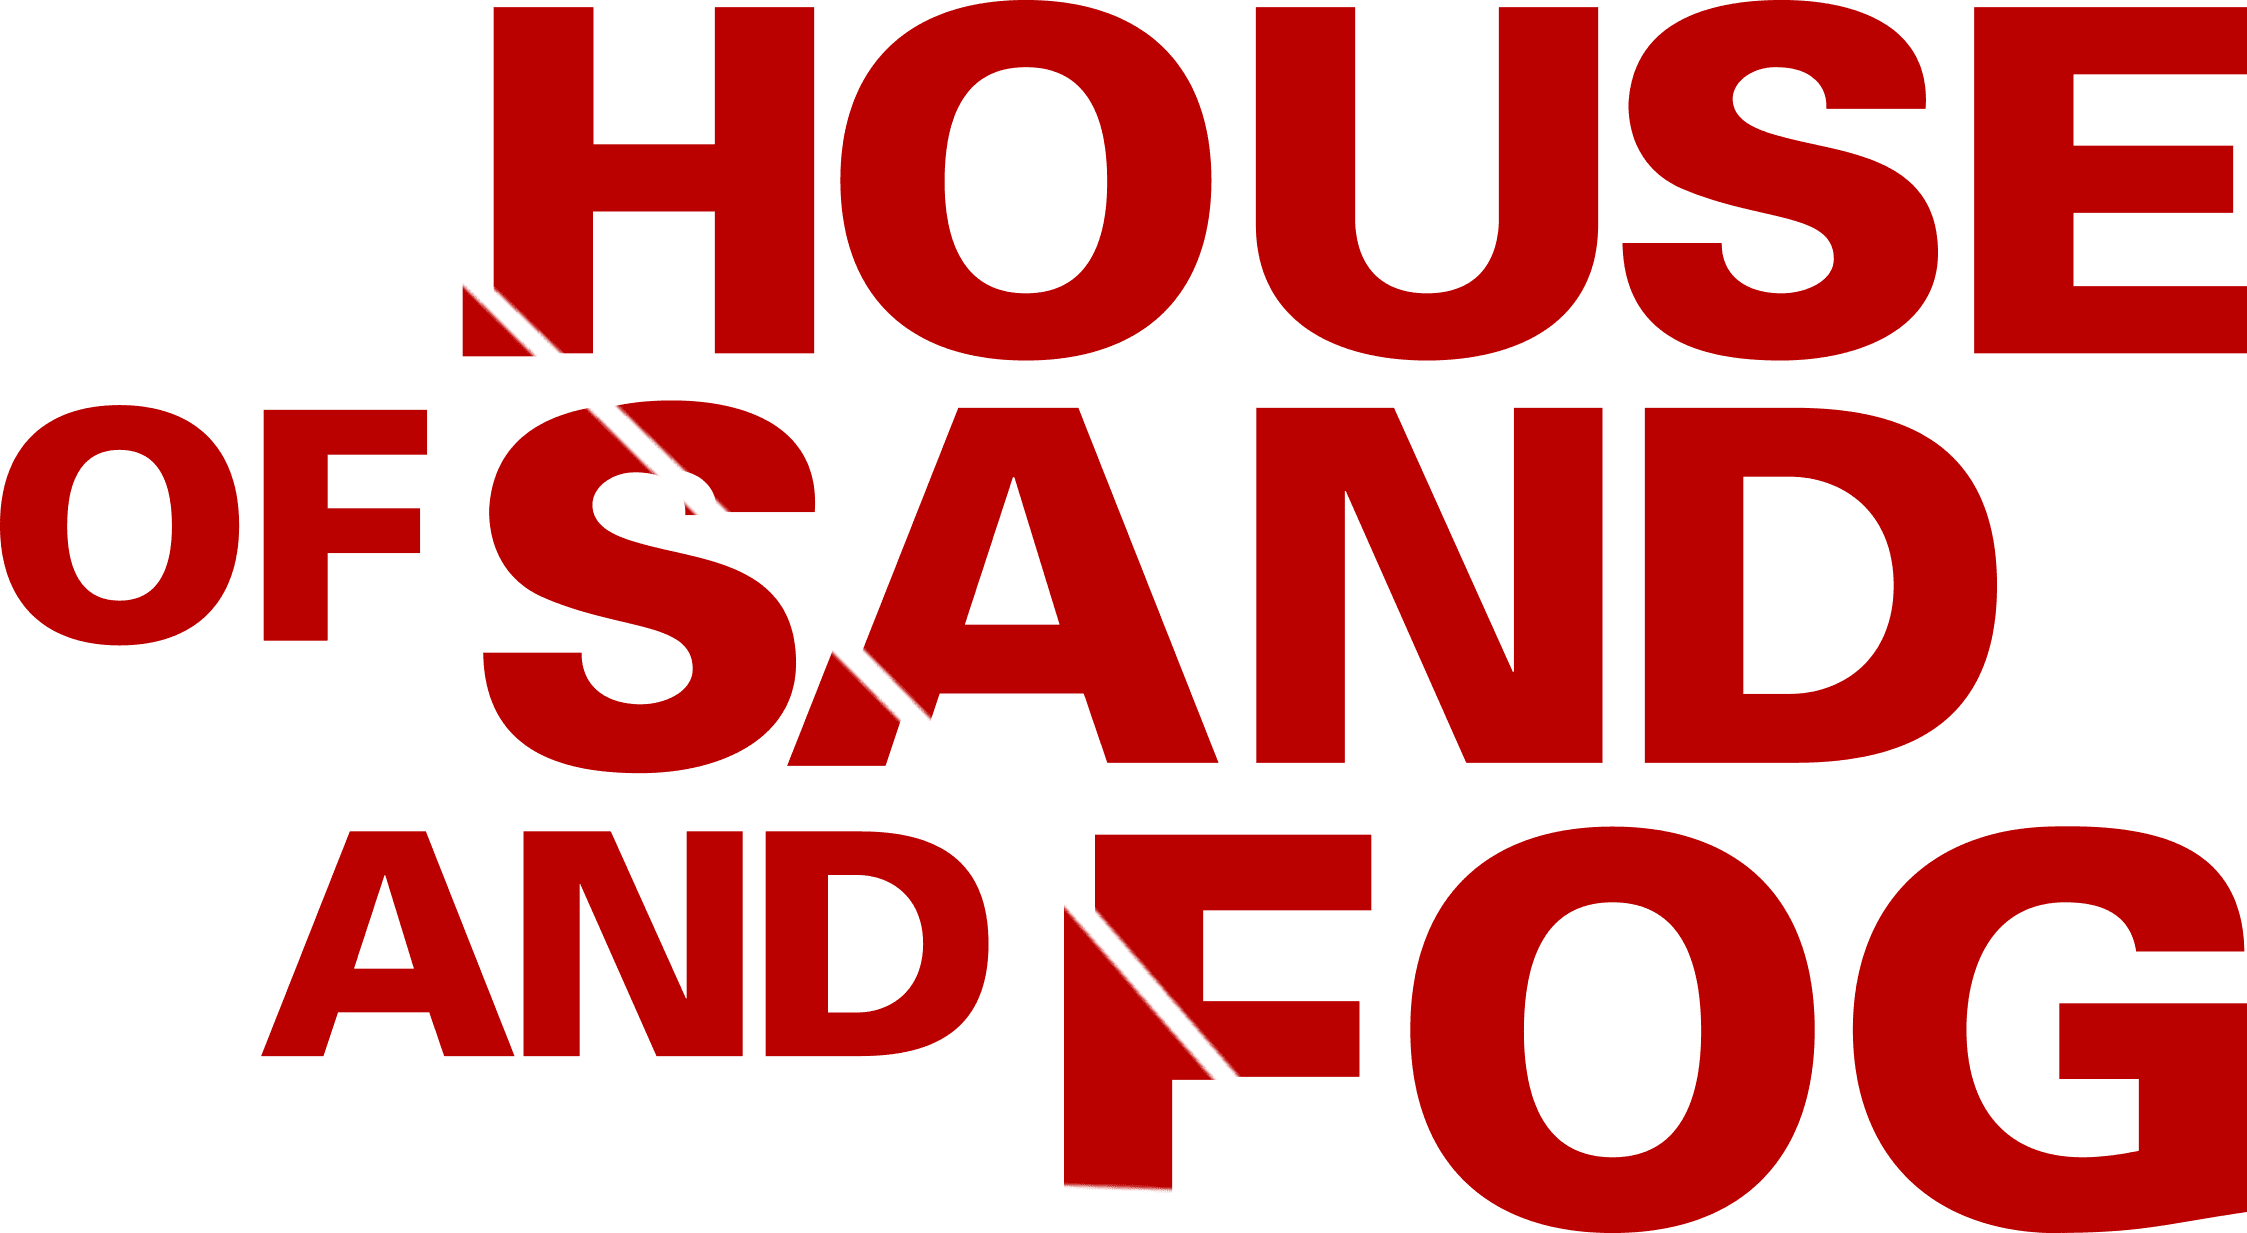 House of Sand and Fog logo